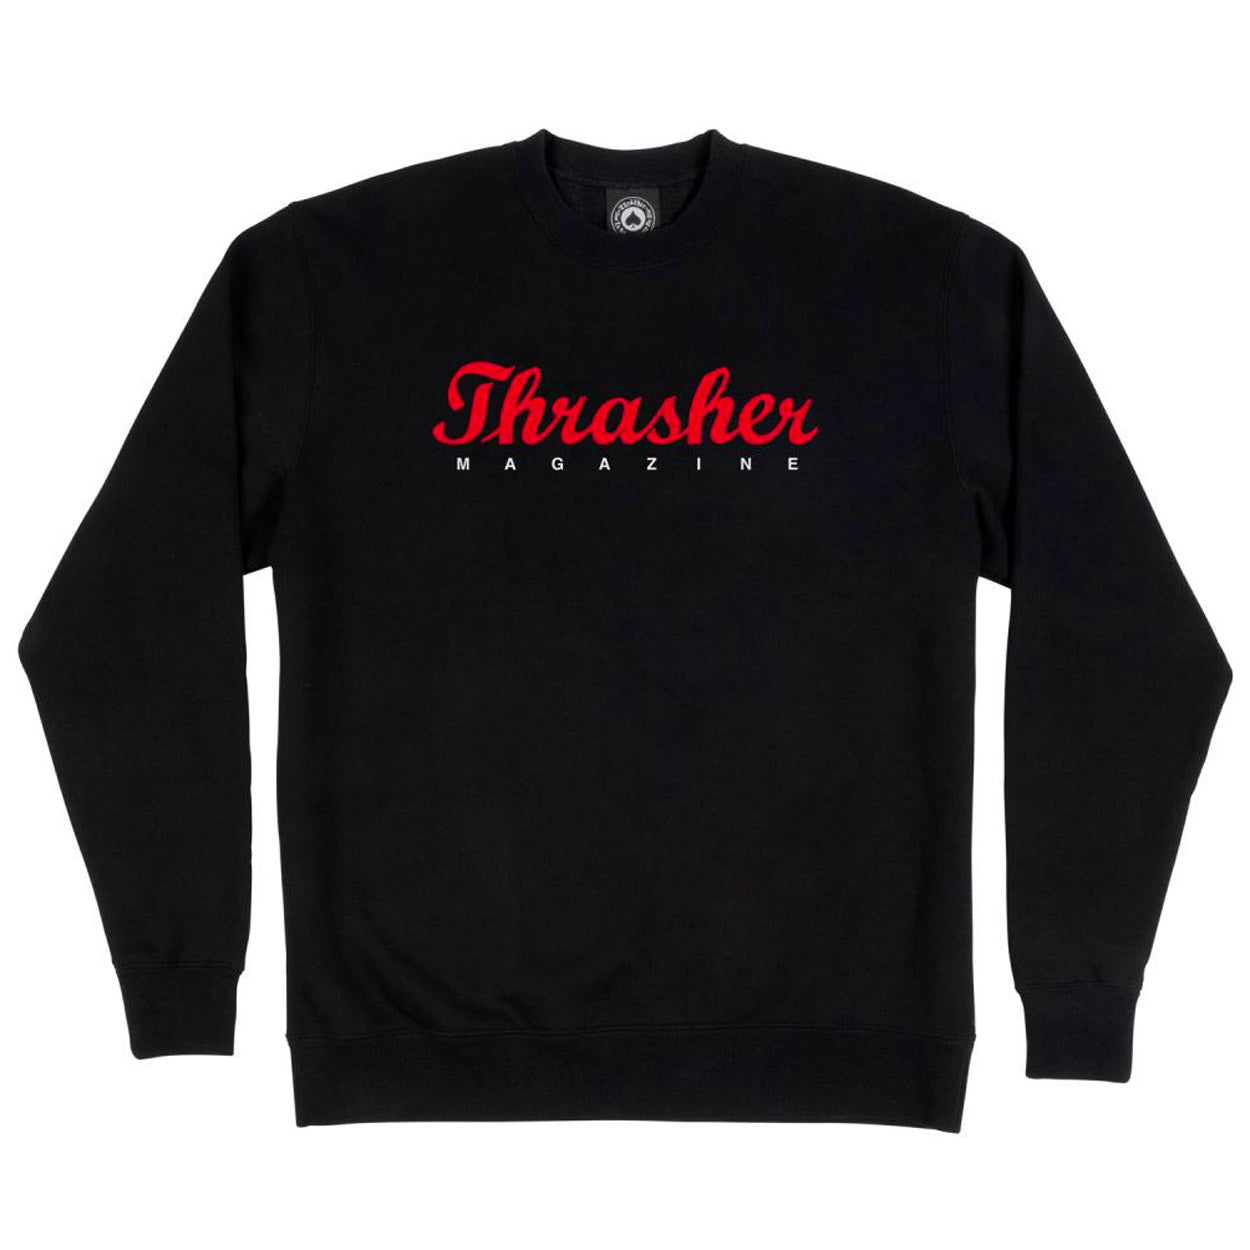 Thrasher - Script - Crew Sweatshirt - Black - Prime Delux Store